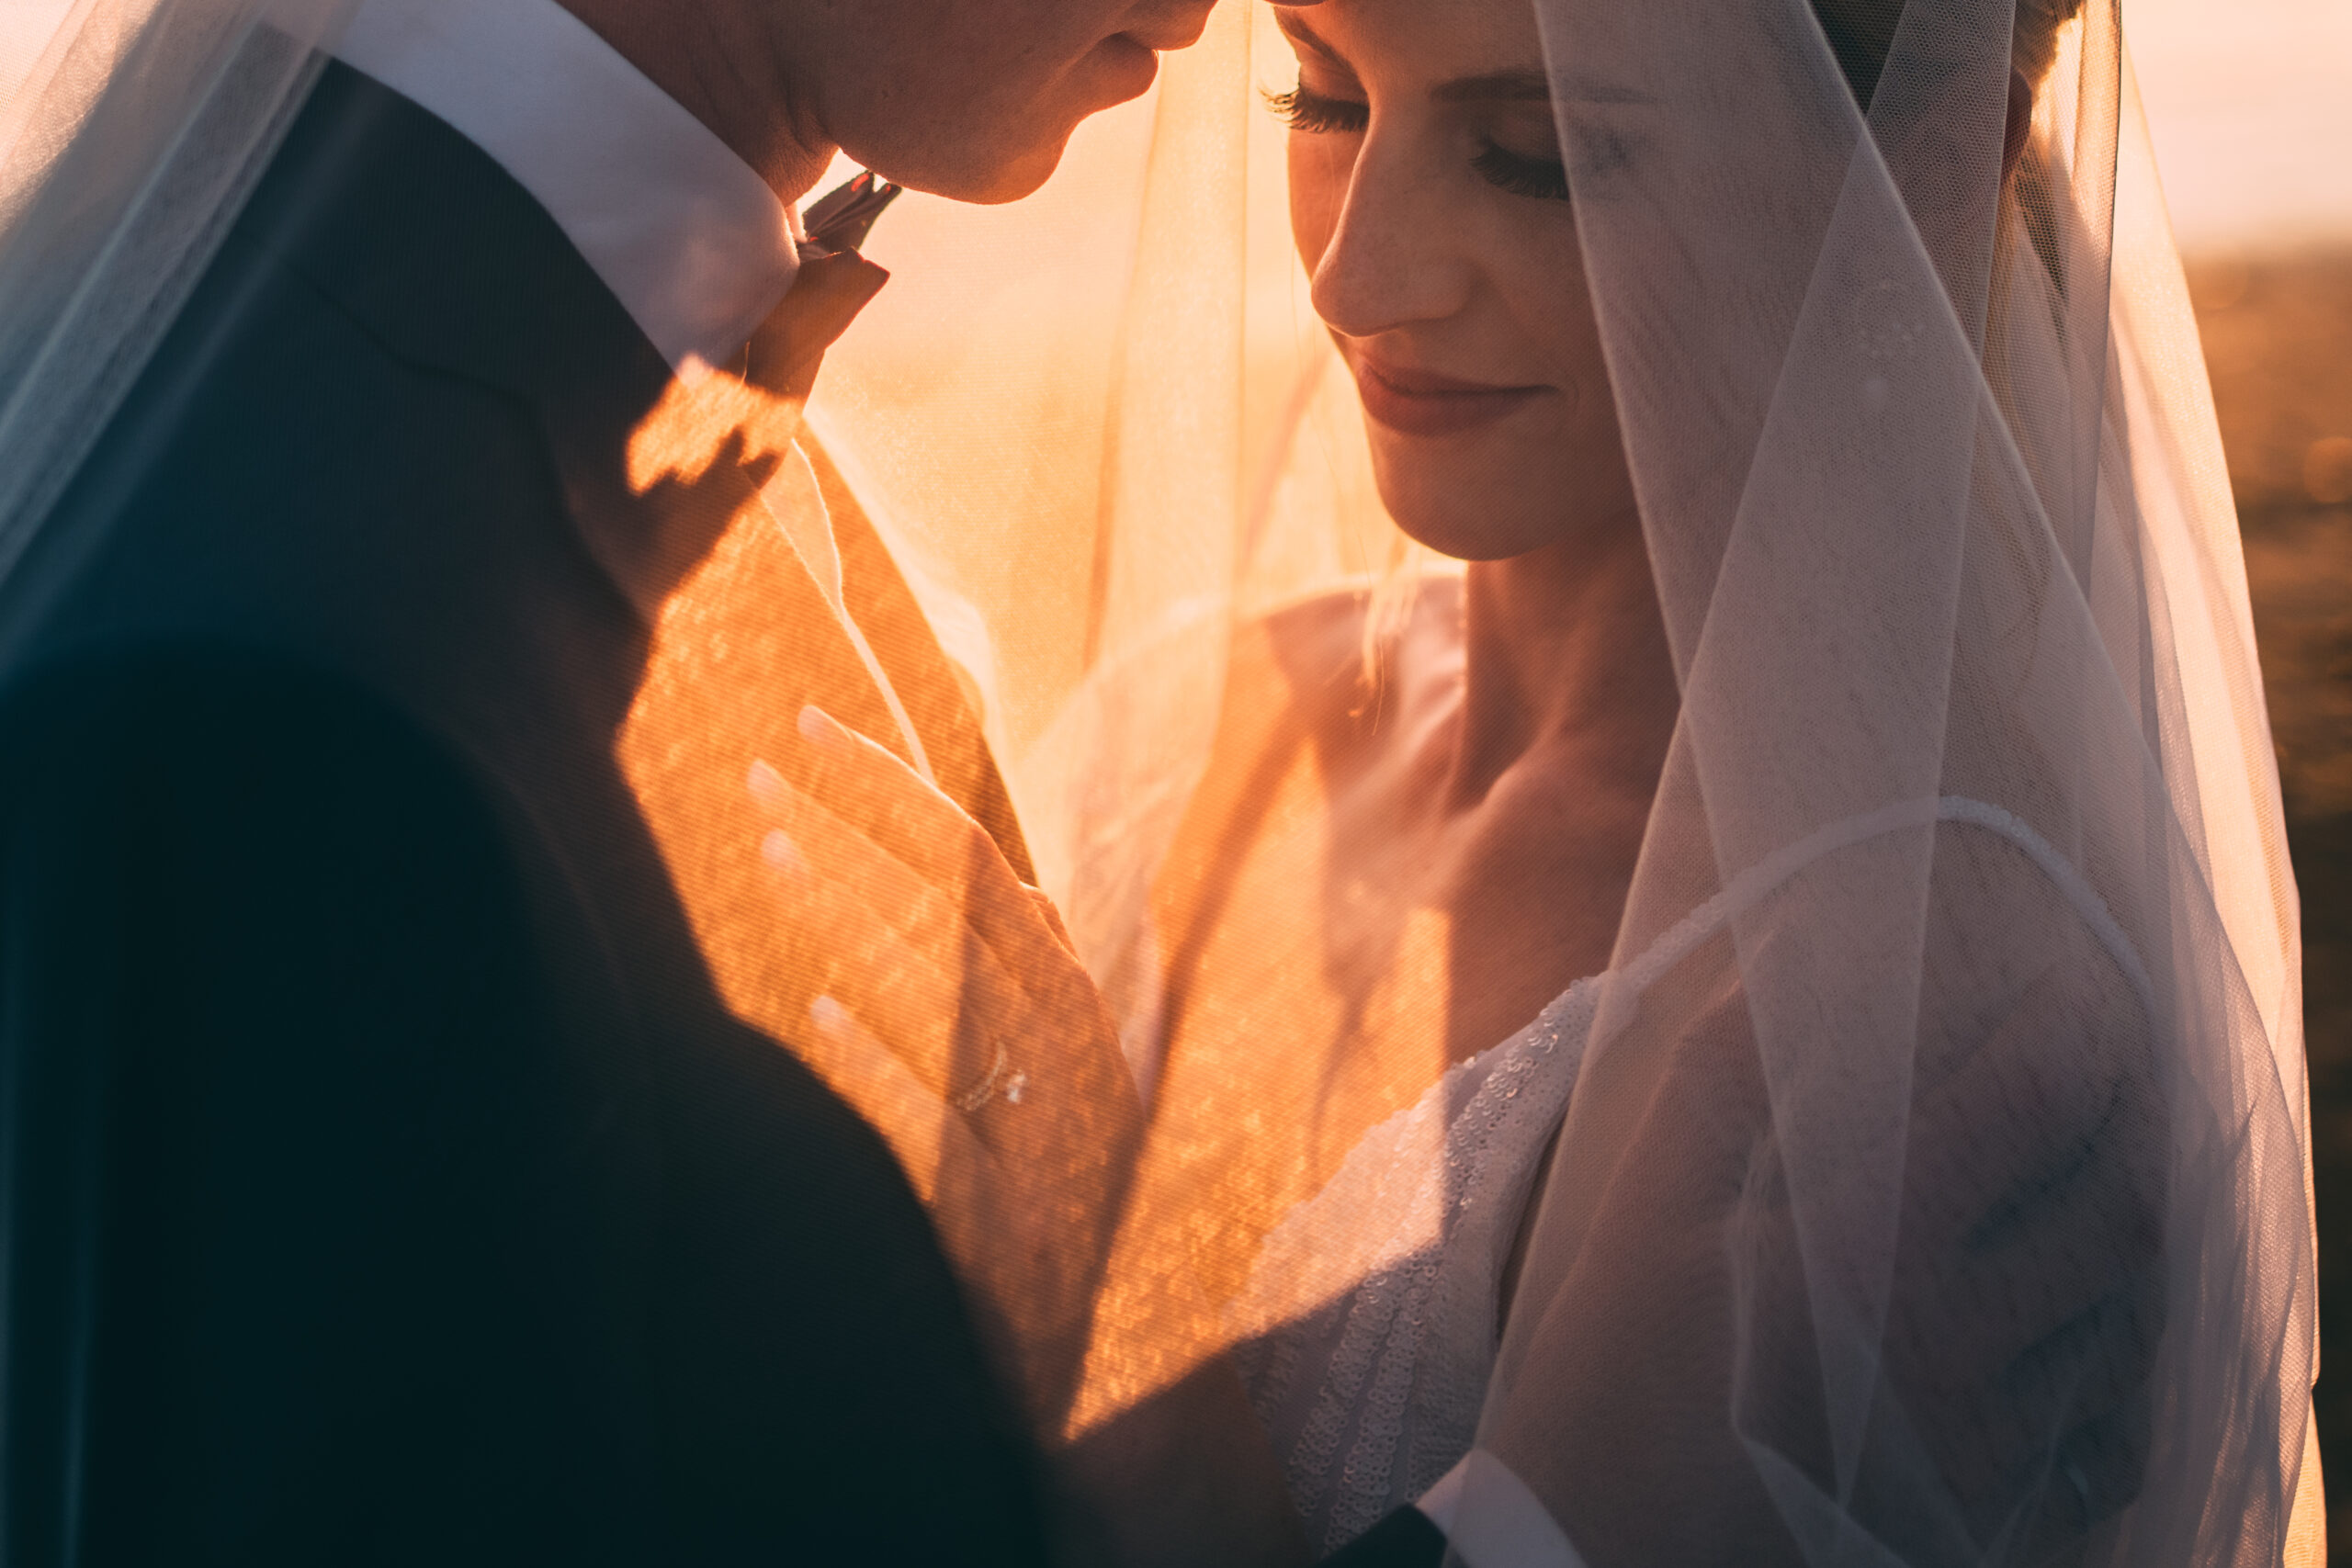 bride and groom at sunset under wedding veil